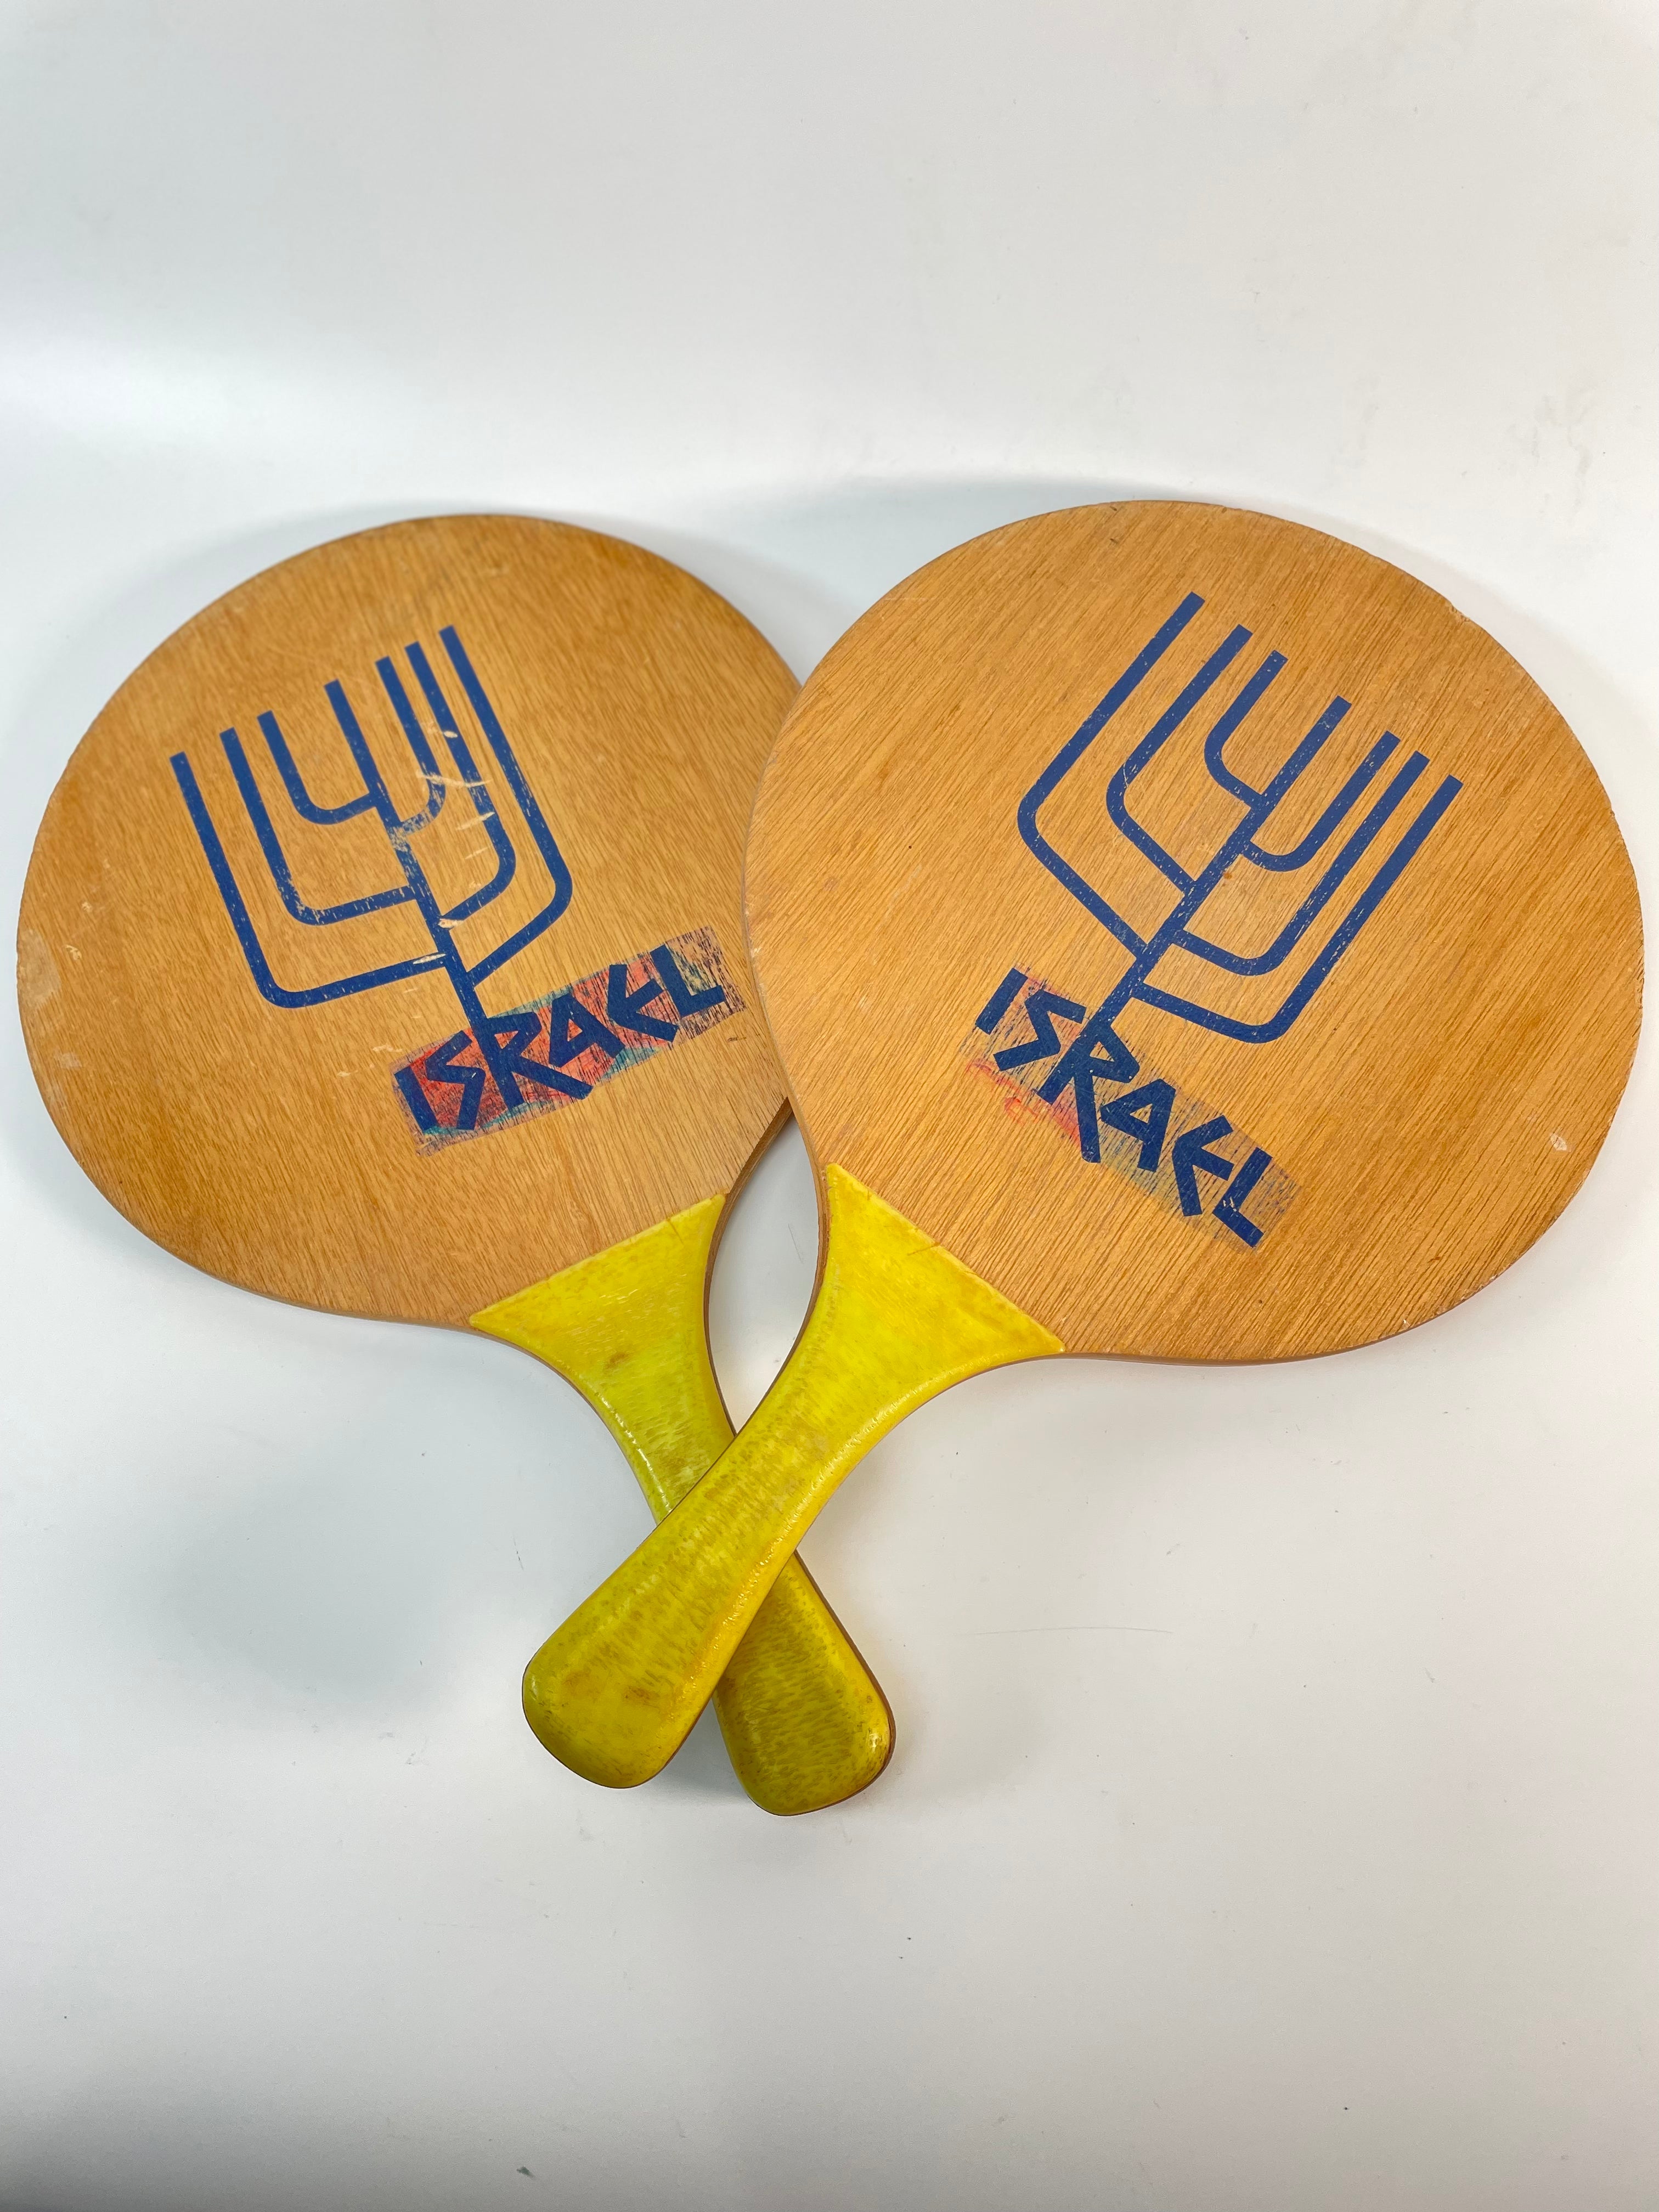 Wooden Beach Tennis Rackets from Israel - Set of 2